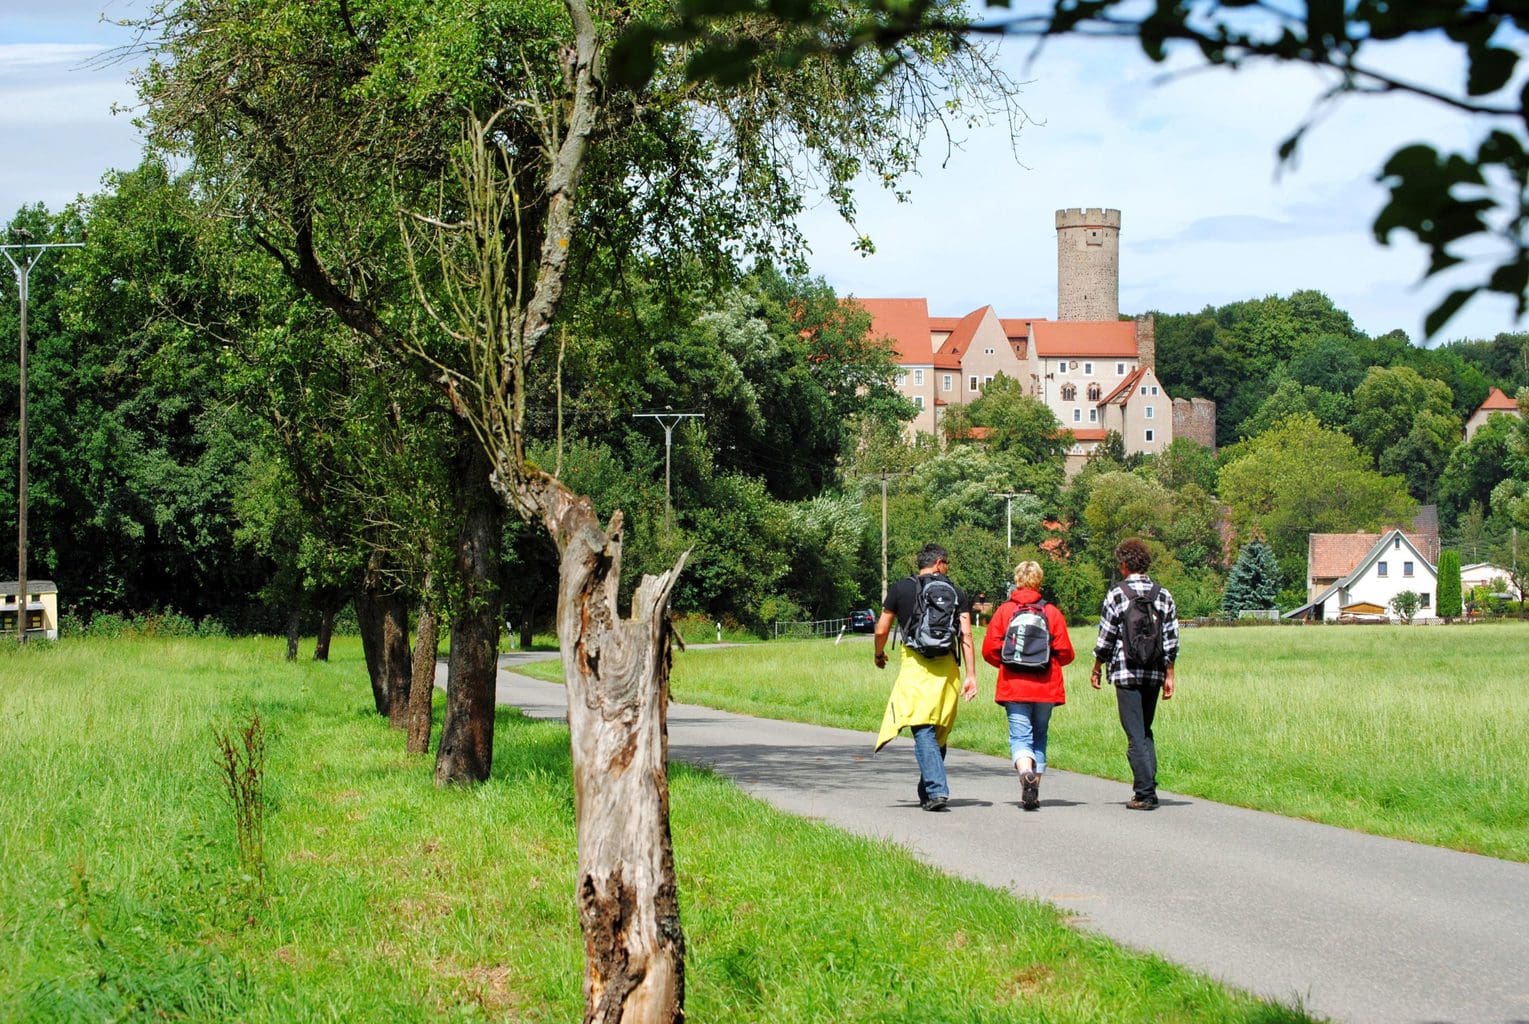 Wandelaars op weg nach burcht Gnandstein in Saksen bij Leipzig